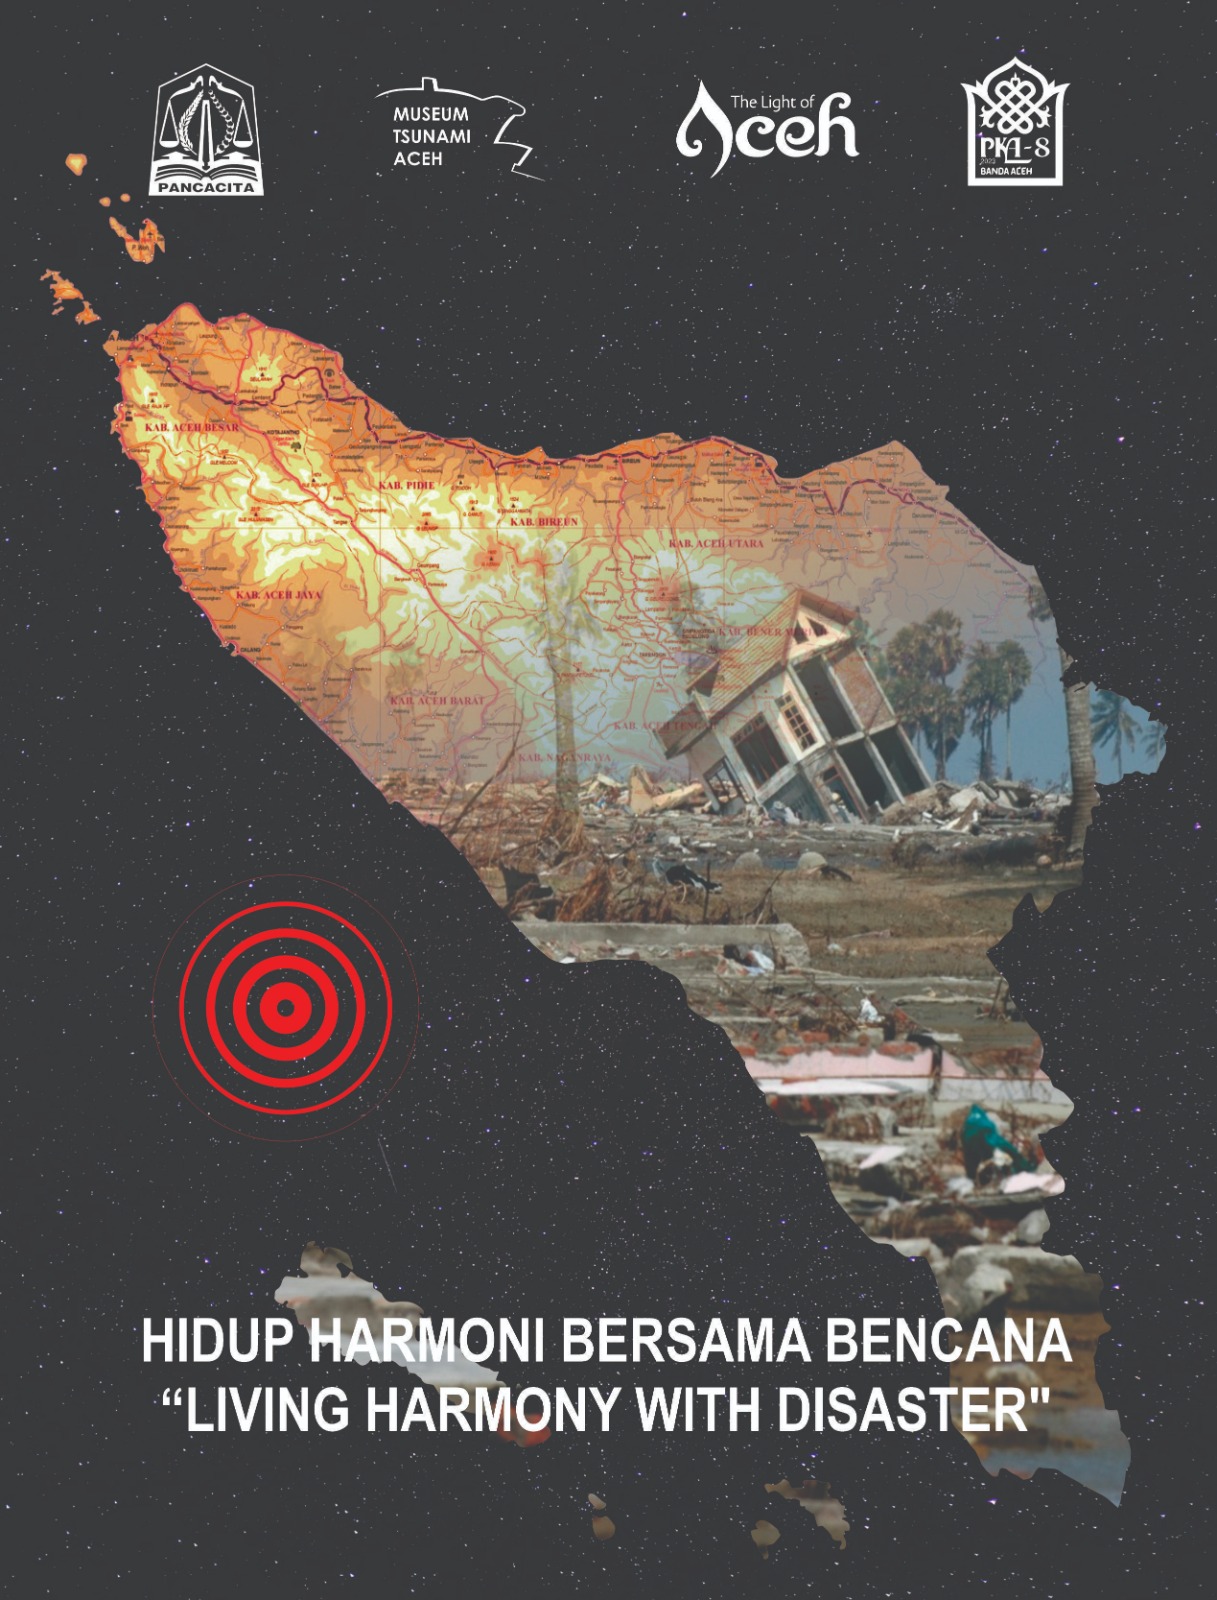 Museum Tsunami Aceh Buka di Hari Ketiga Idulfitri 1444 H
